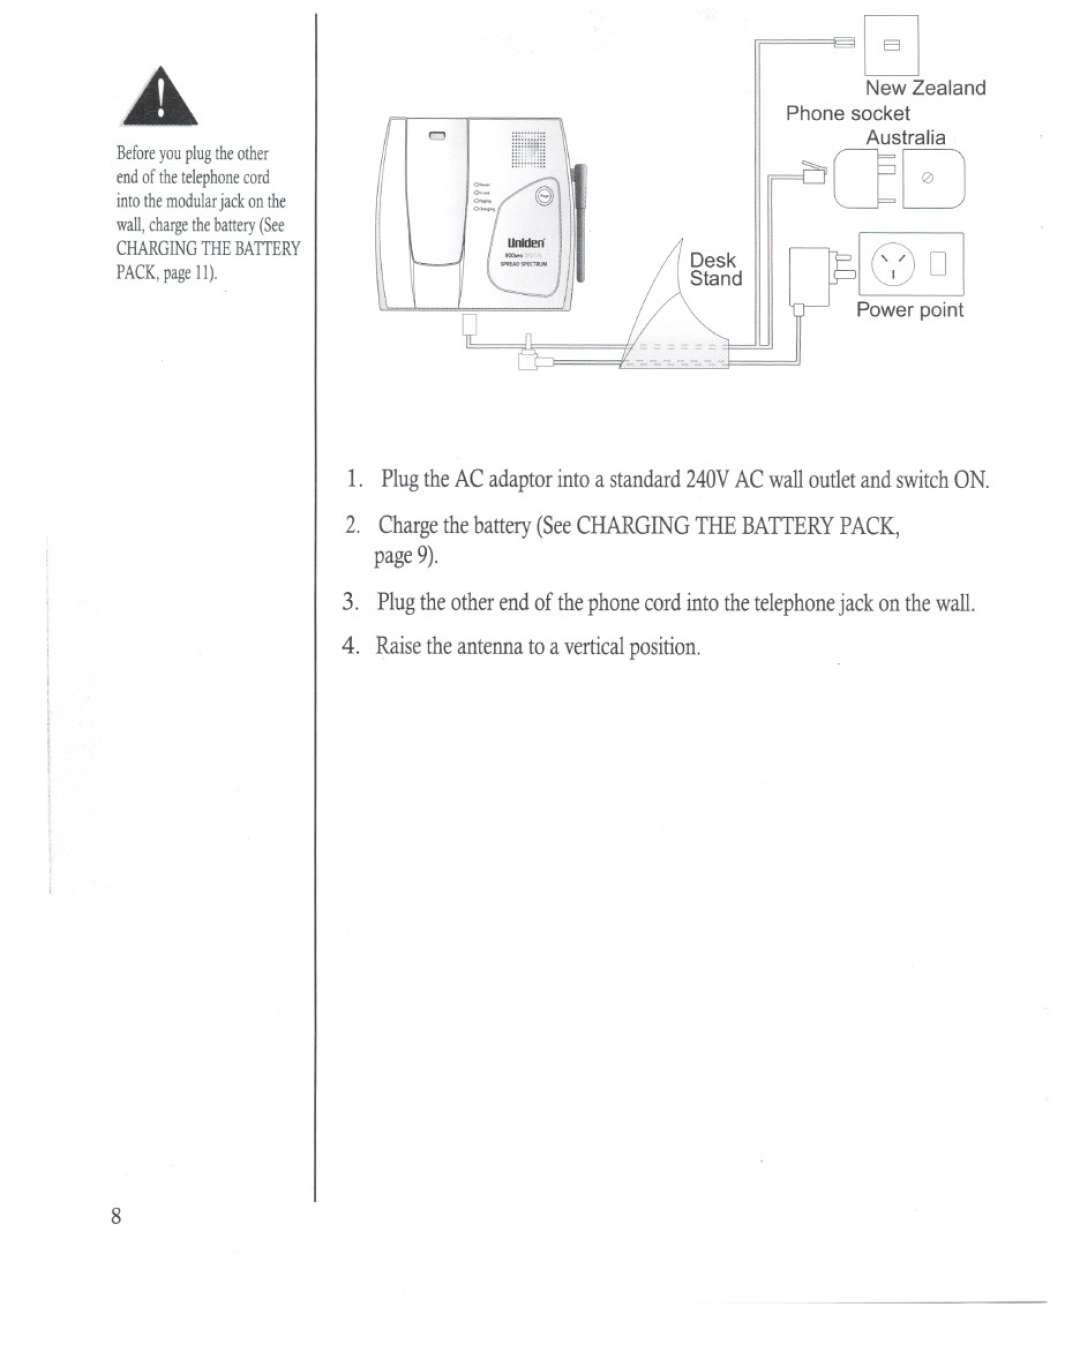 Uniden DS70 manual Qej Ic D, New Zealand Phone socket Australia, Power point 